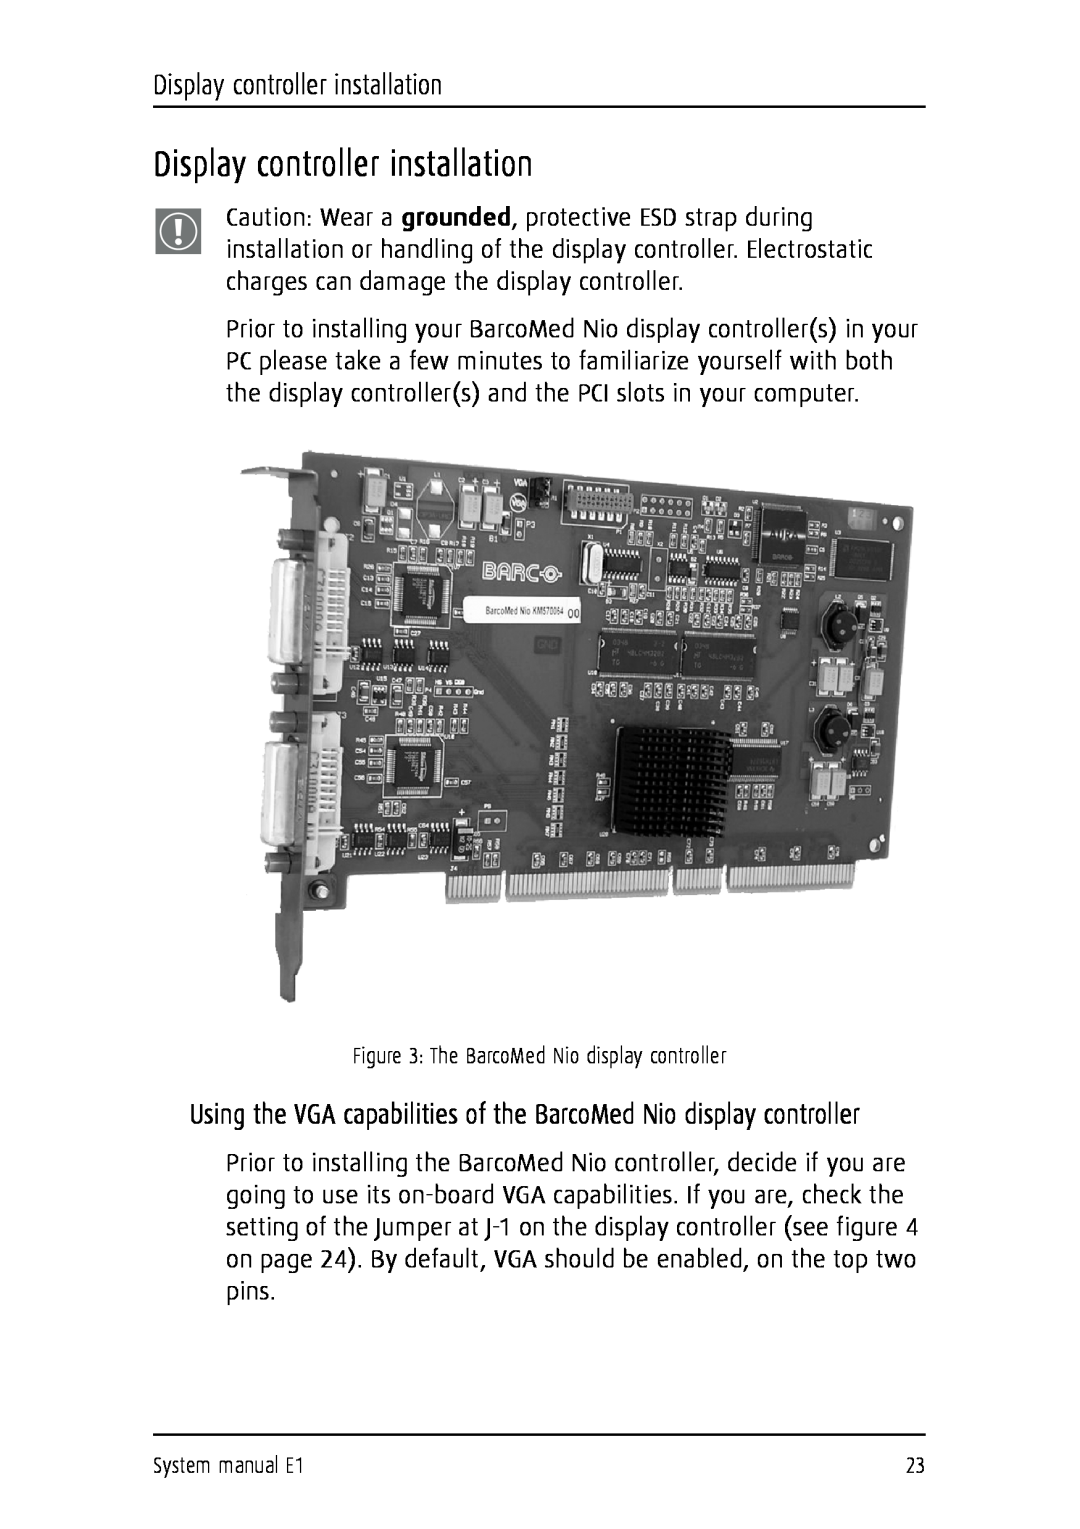 Barco E1 manual Display controller installation, Using the VGA capabilities of the BarcoMed Nio display controller 